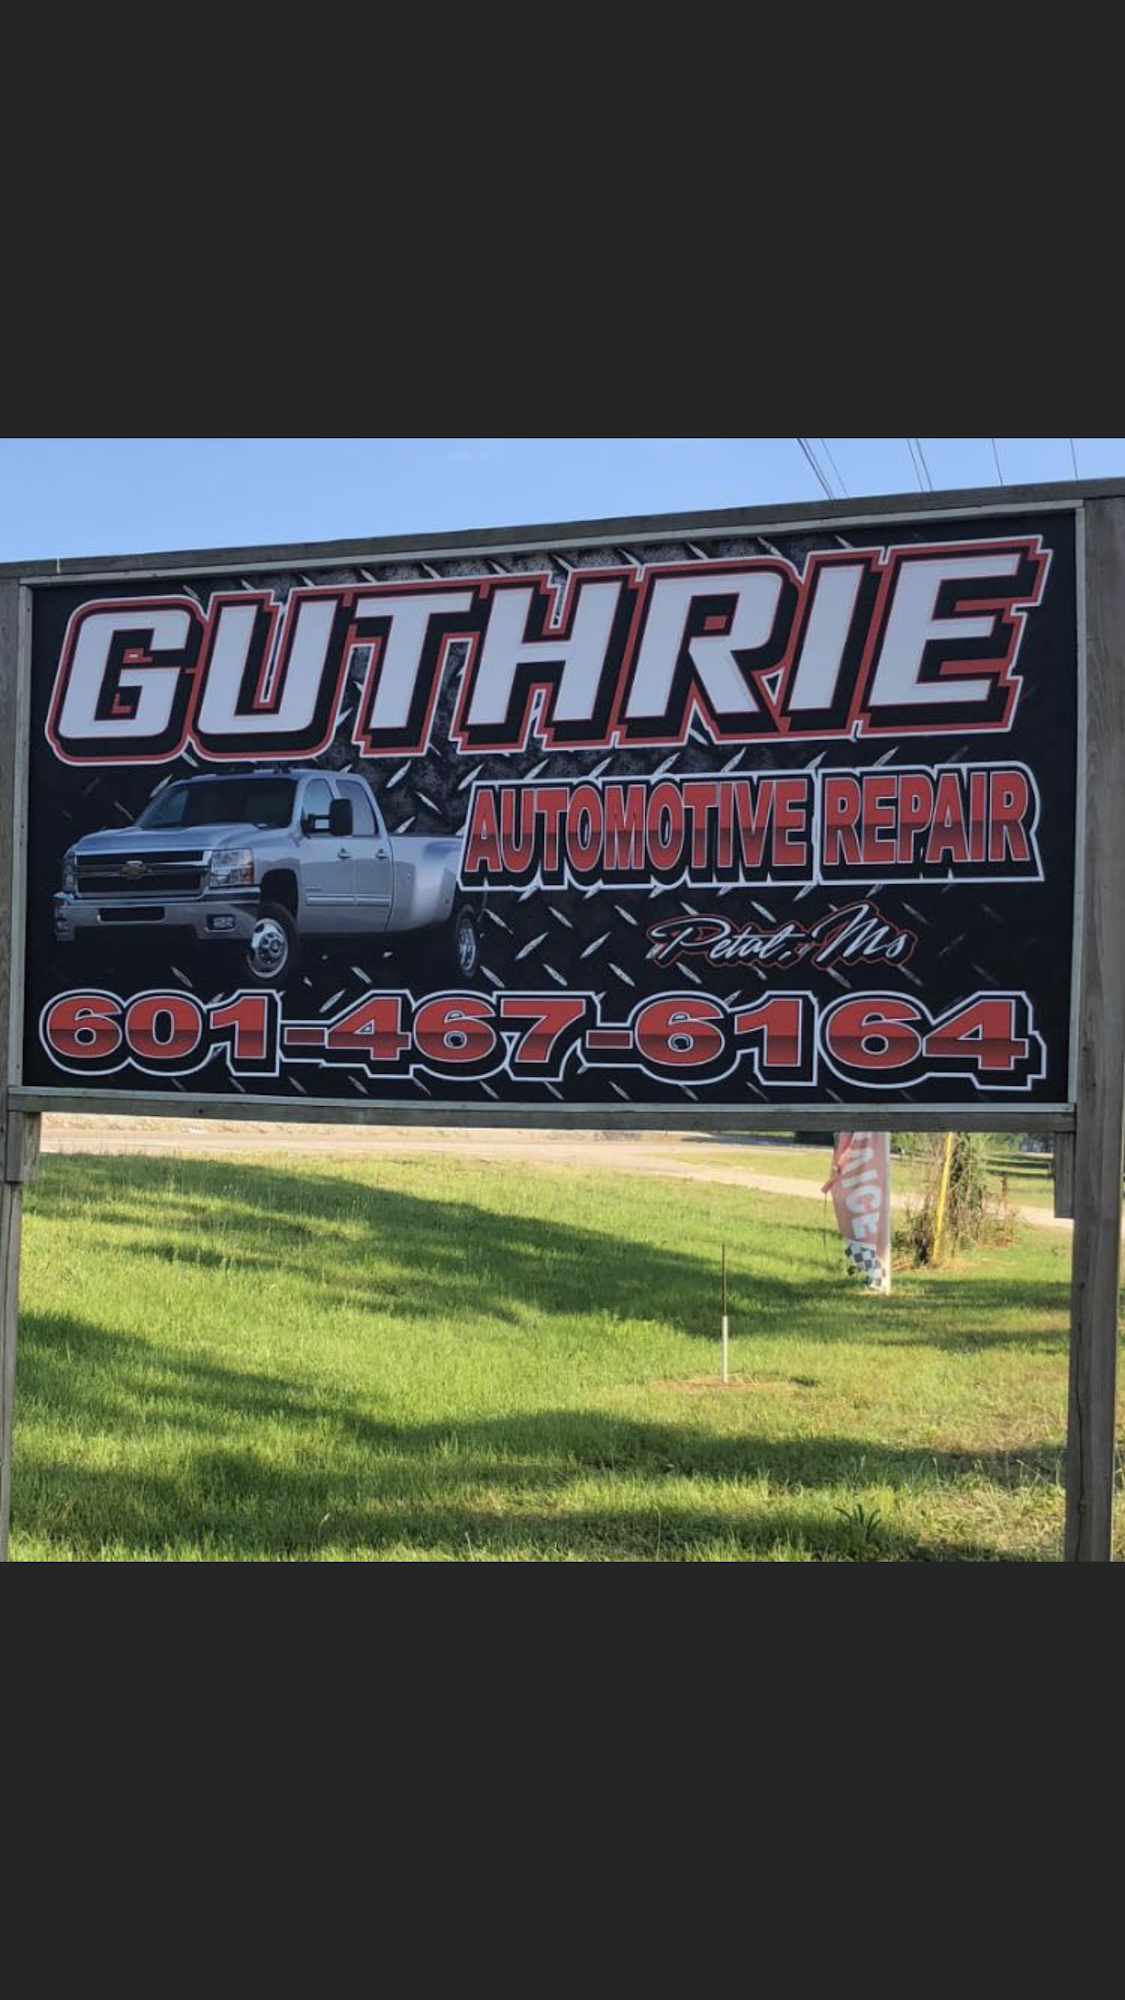 Guthrie Automotive Repair